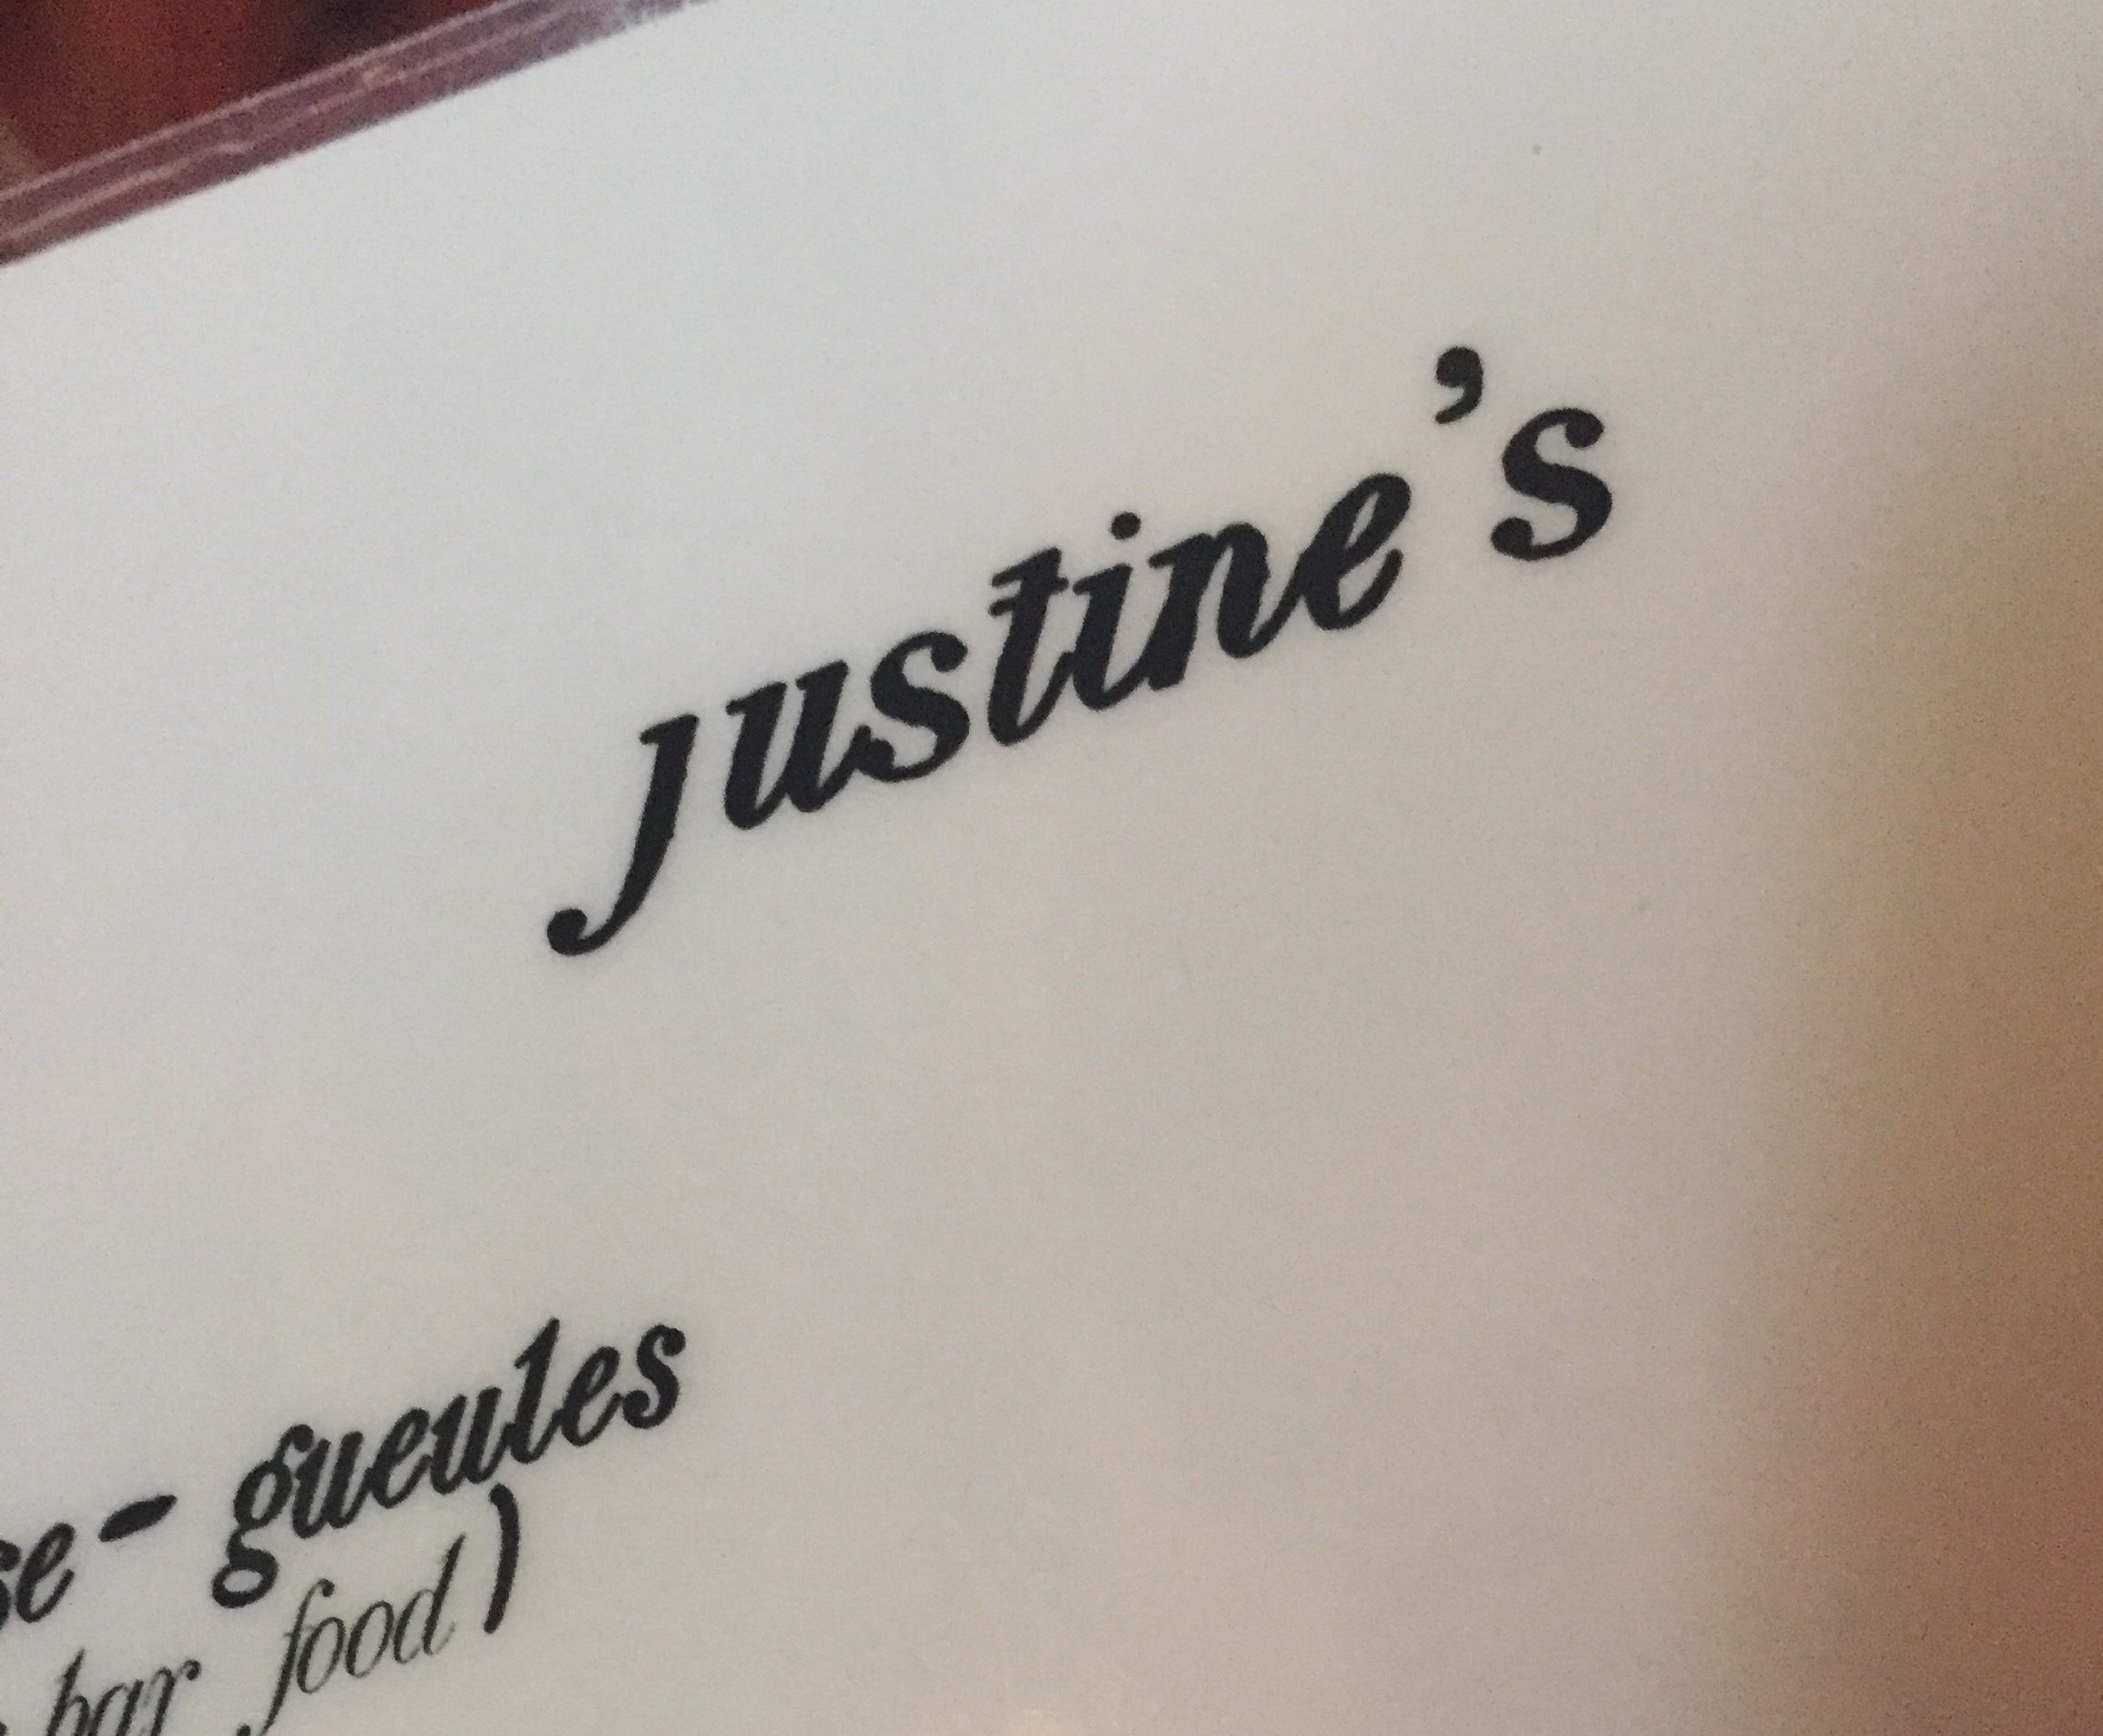 Justine's logo